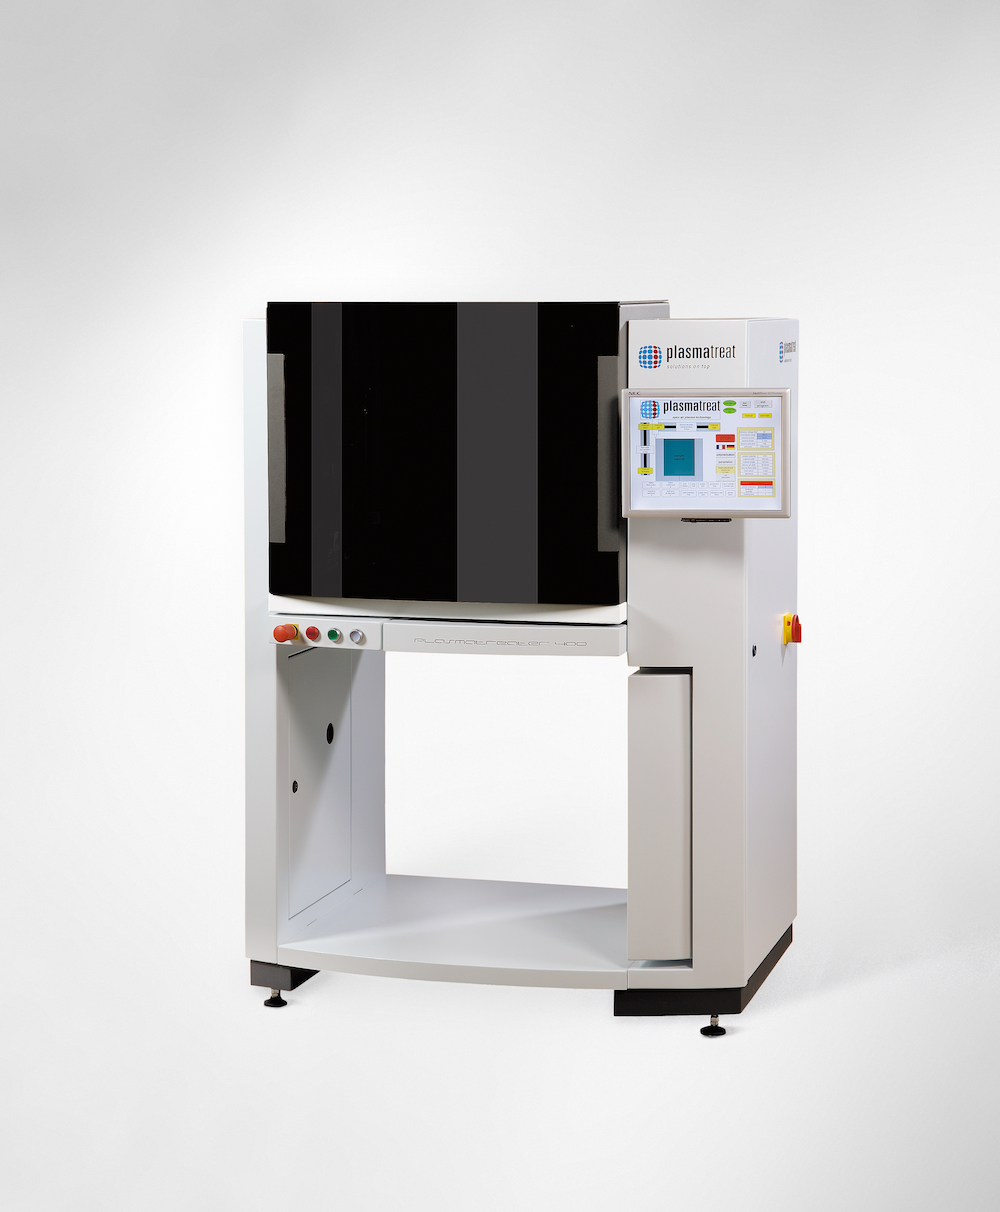 Openair® Plasmatreater AS 400 实验室系统